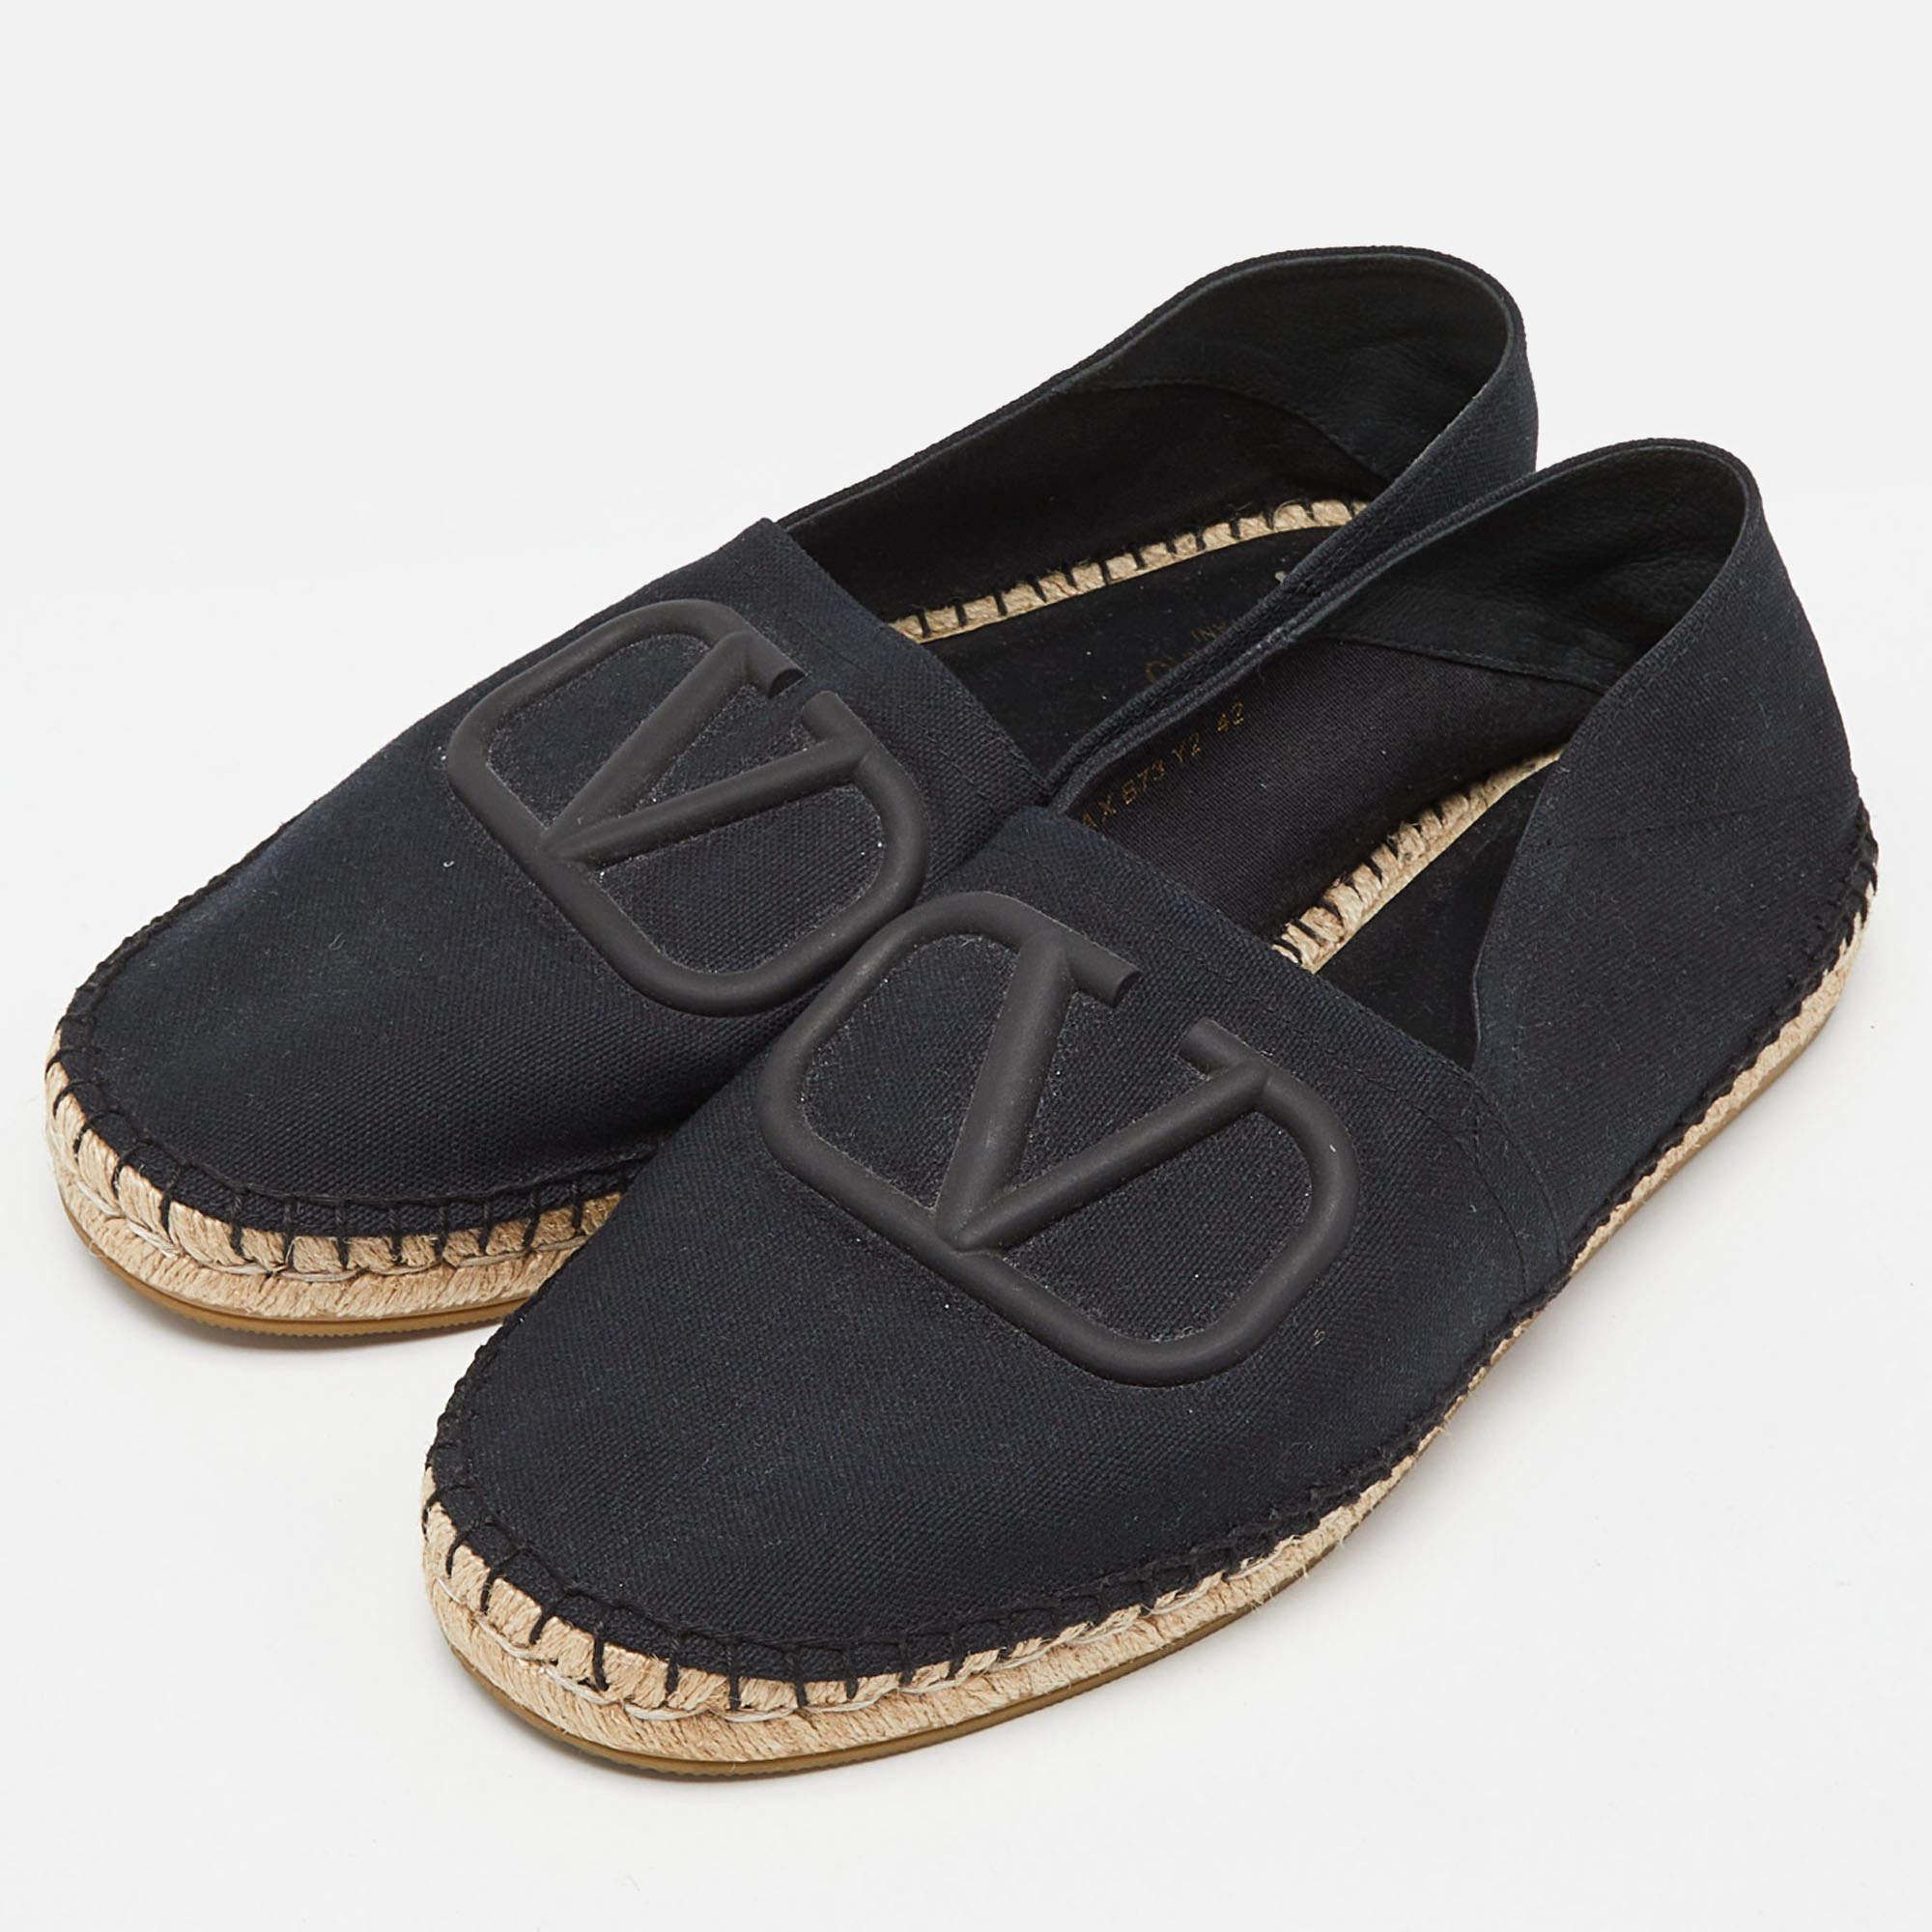 Valentino Black Canvas VLogo Slip On Espadrilles Loafers Size 42 5